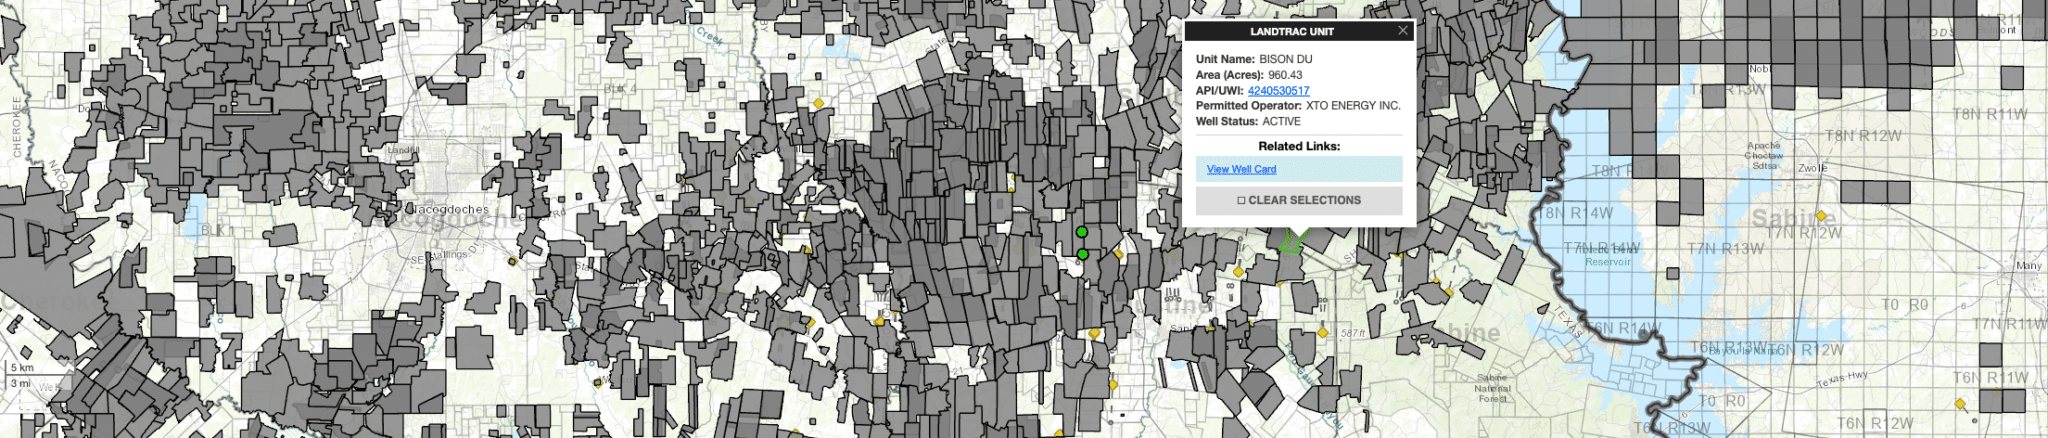 DI Map - Bison - San Augustine